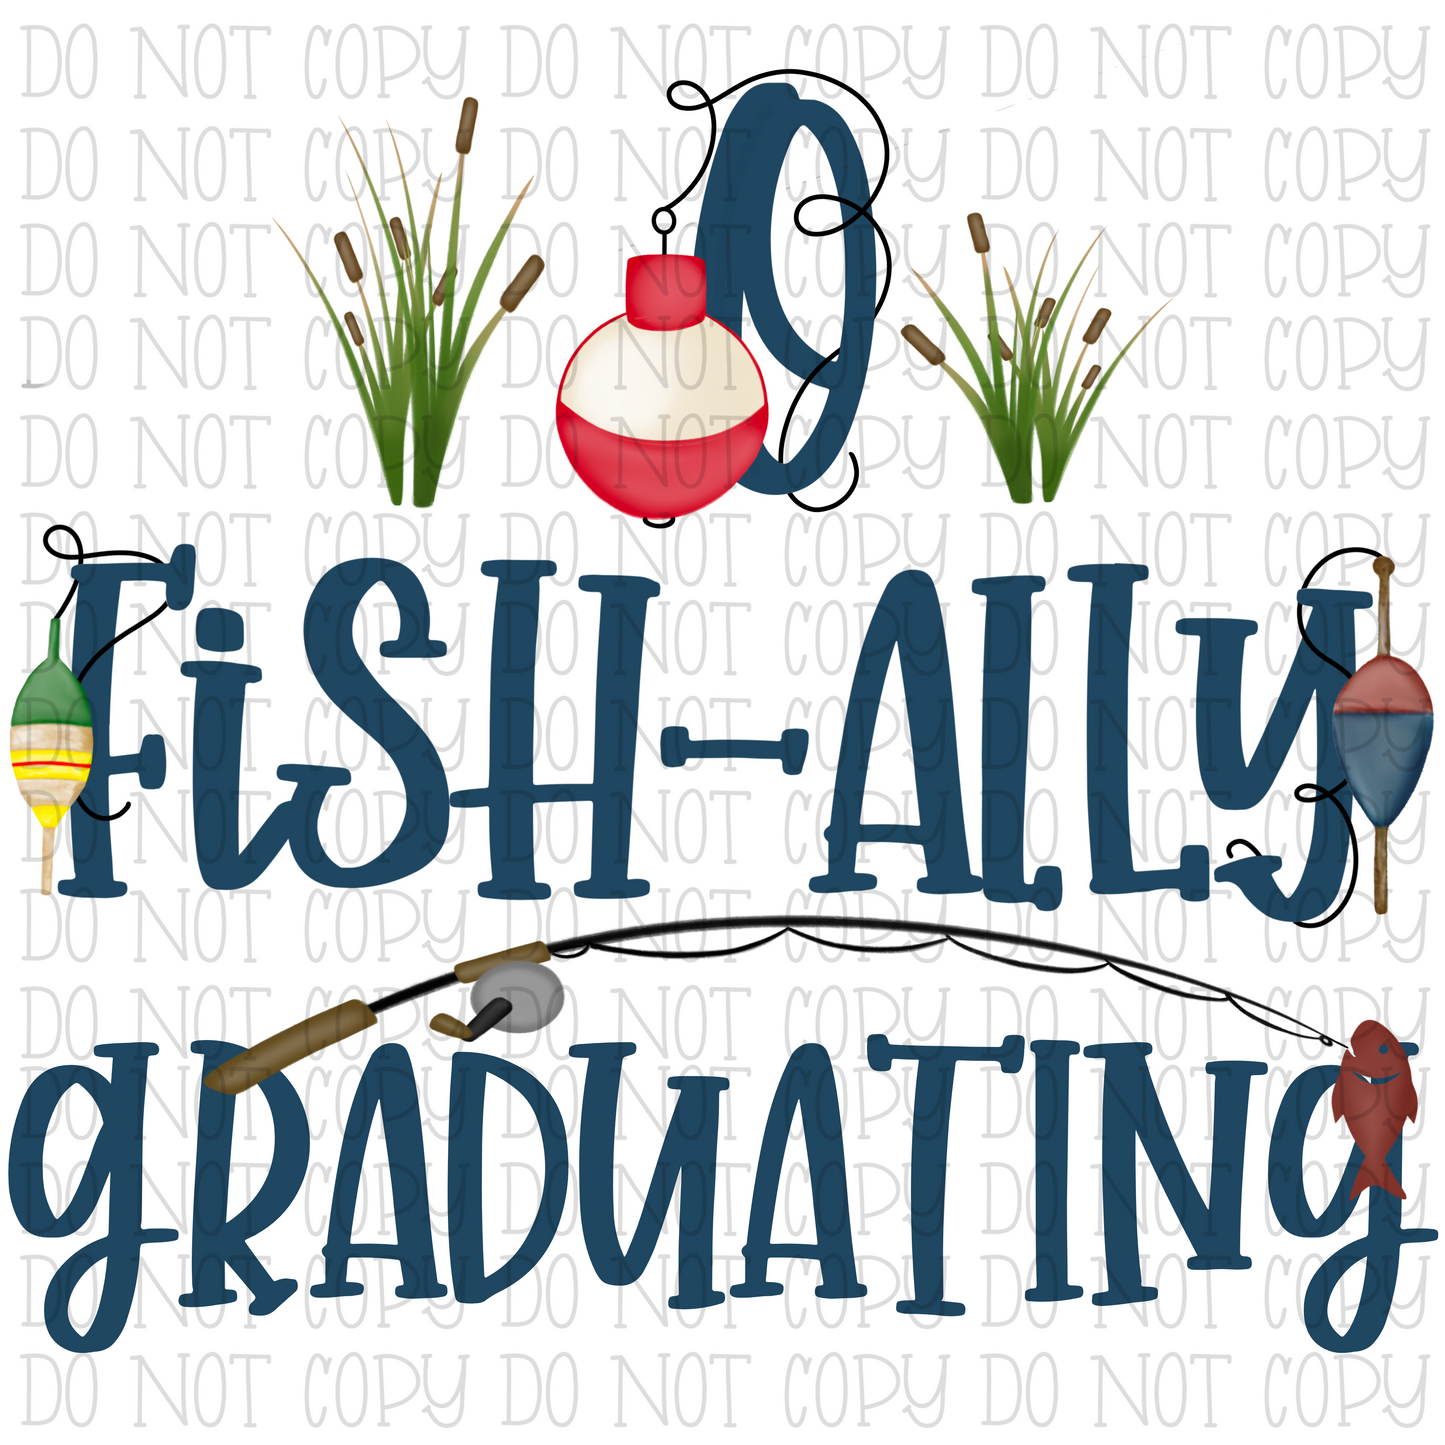 O-Fish-ally Graduating